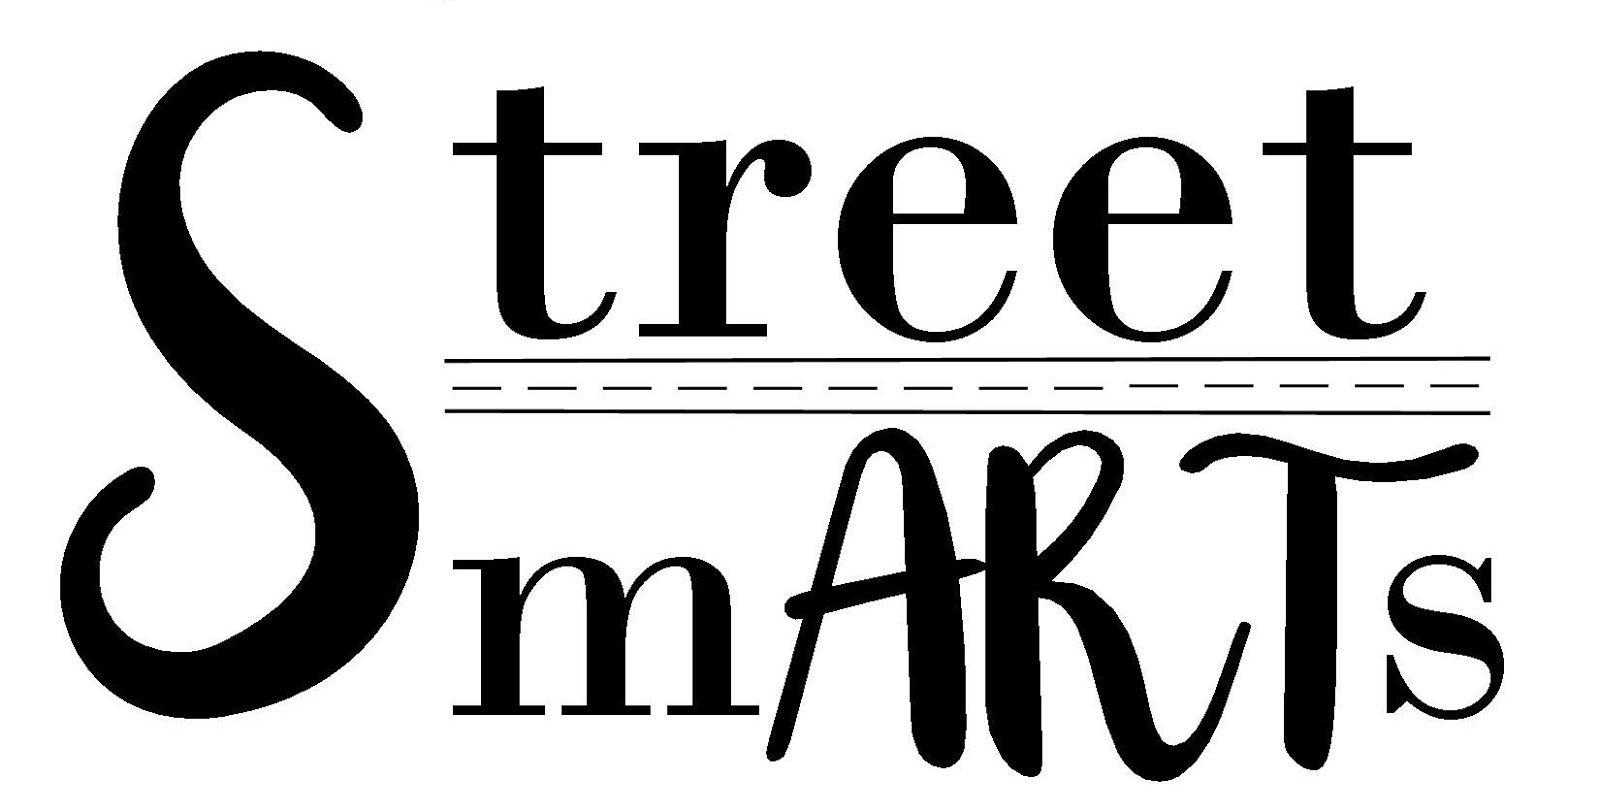 StreetSmarts Logo - The Playworks Group: StreetsmARTs